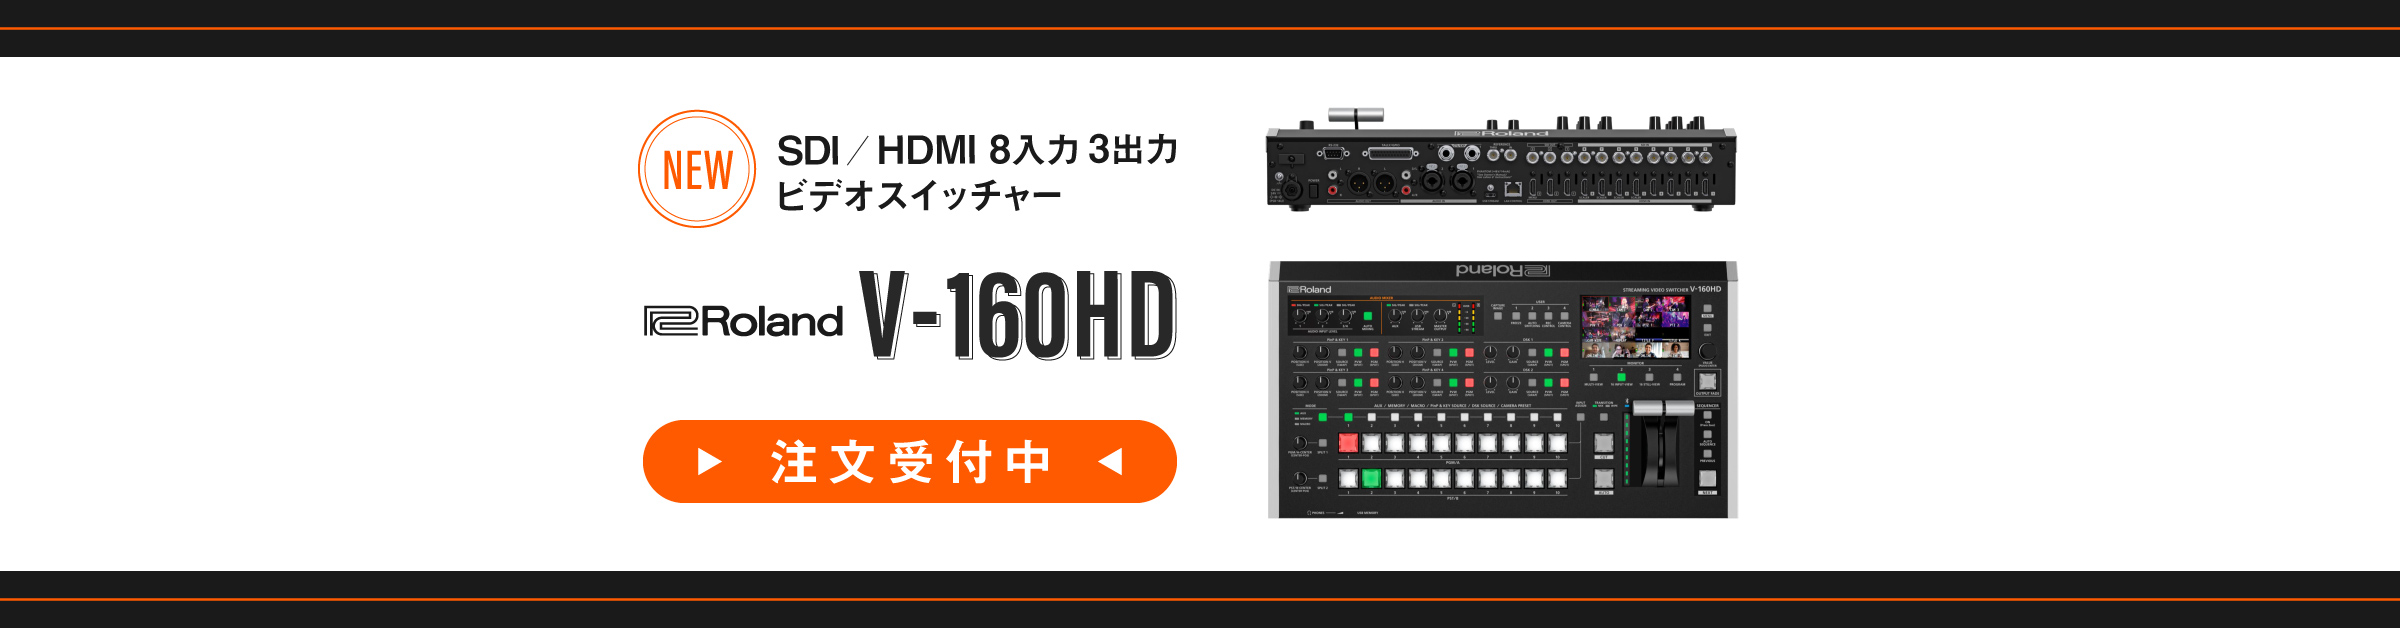 Roland ビデオスイッチャー「V-160HD」注文受付中 – 新着情報 | SYSTEM5